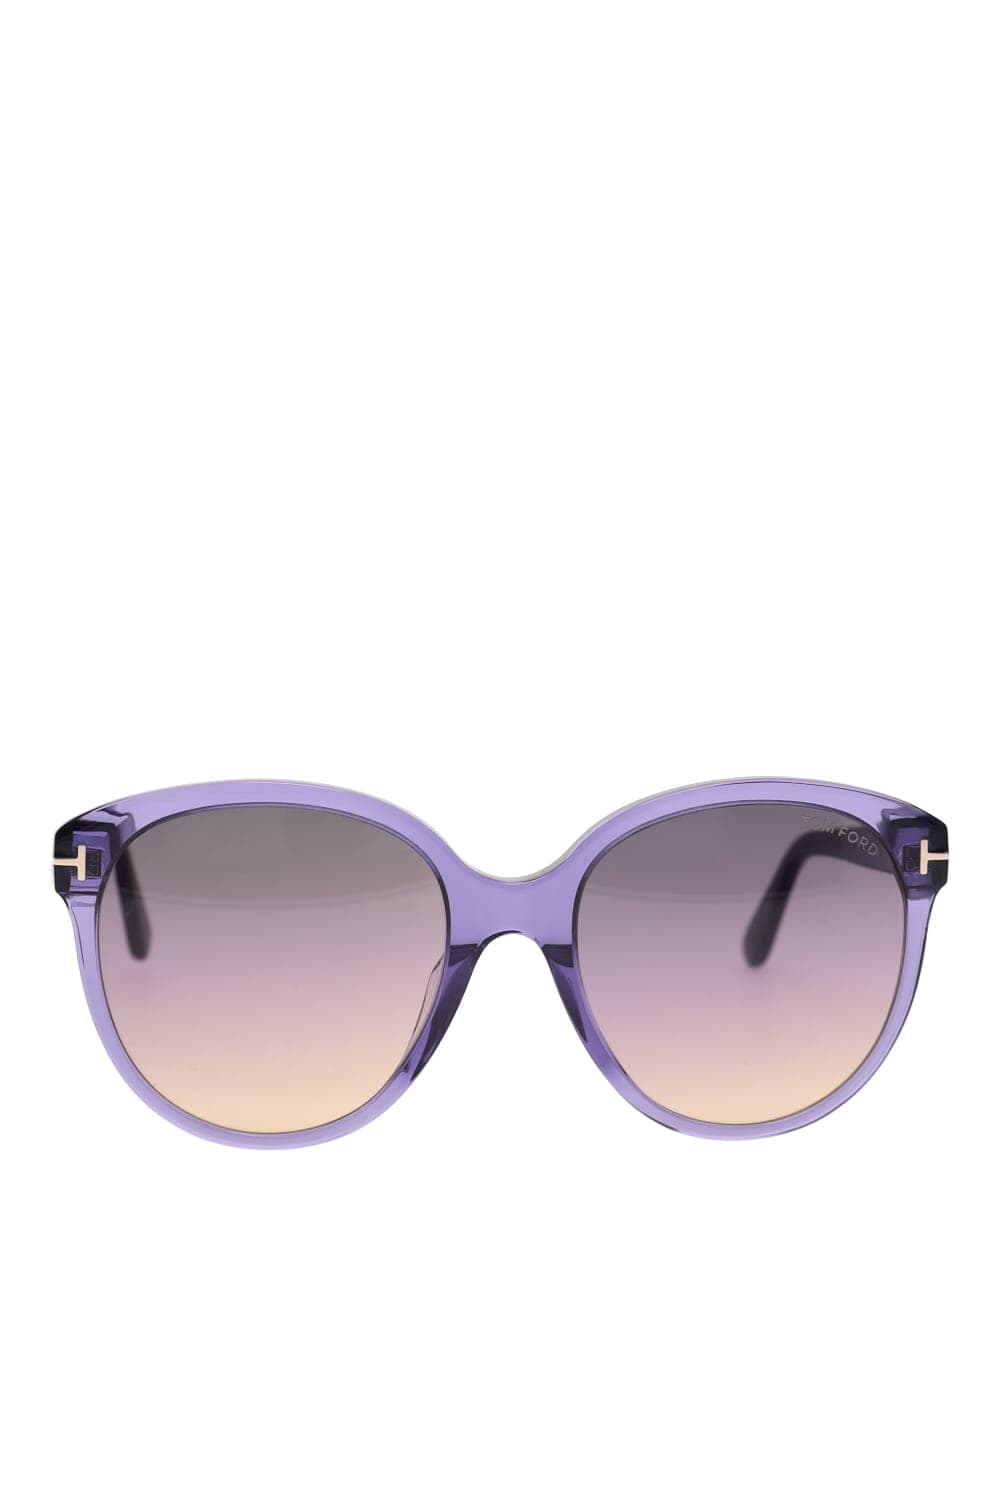 Tom Ford Eyewear FT0957-D Transparent Purple Sunglasses FT0957-D Purple/Smoke